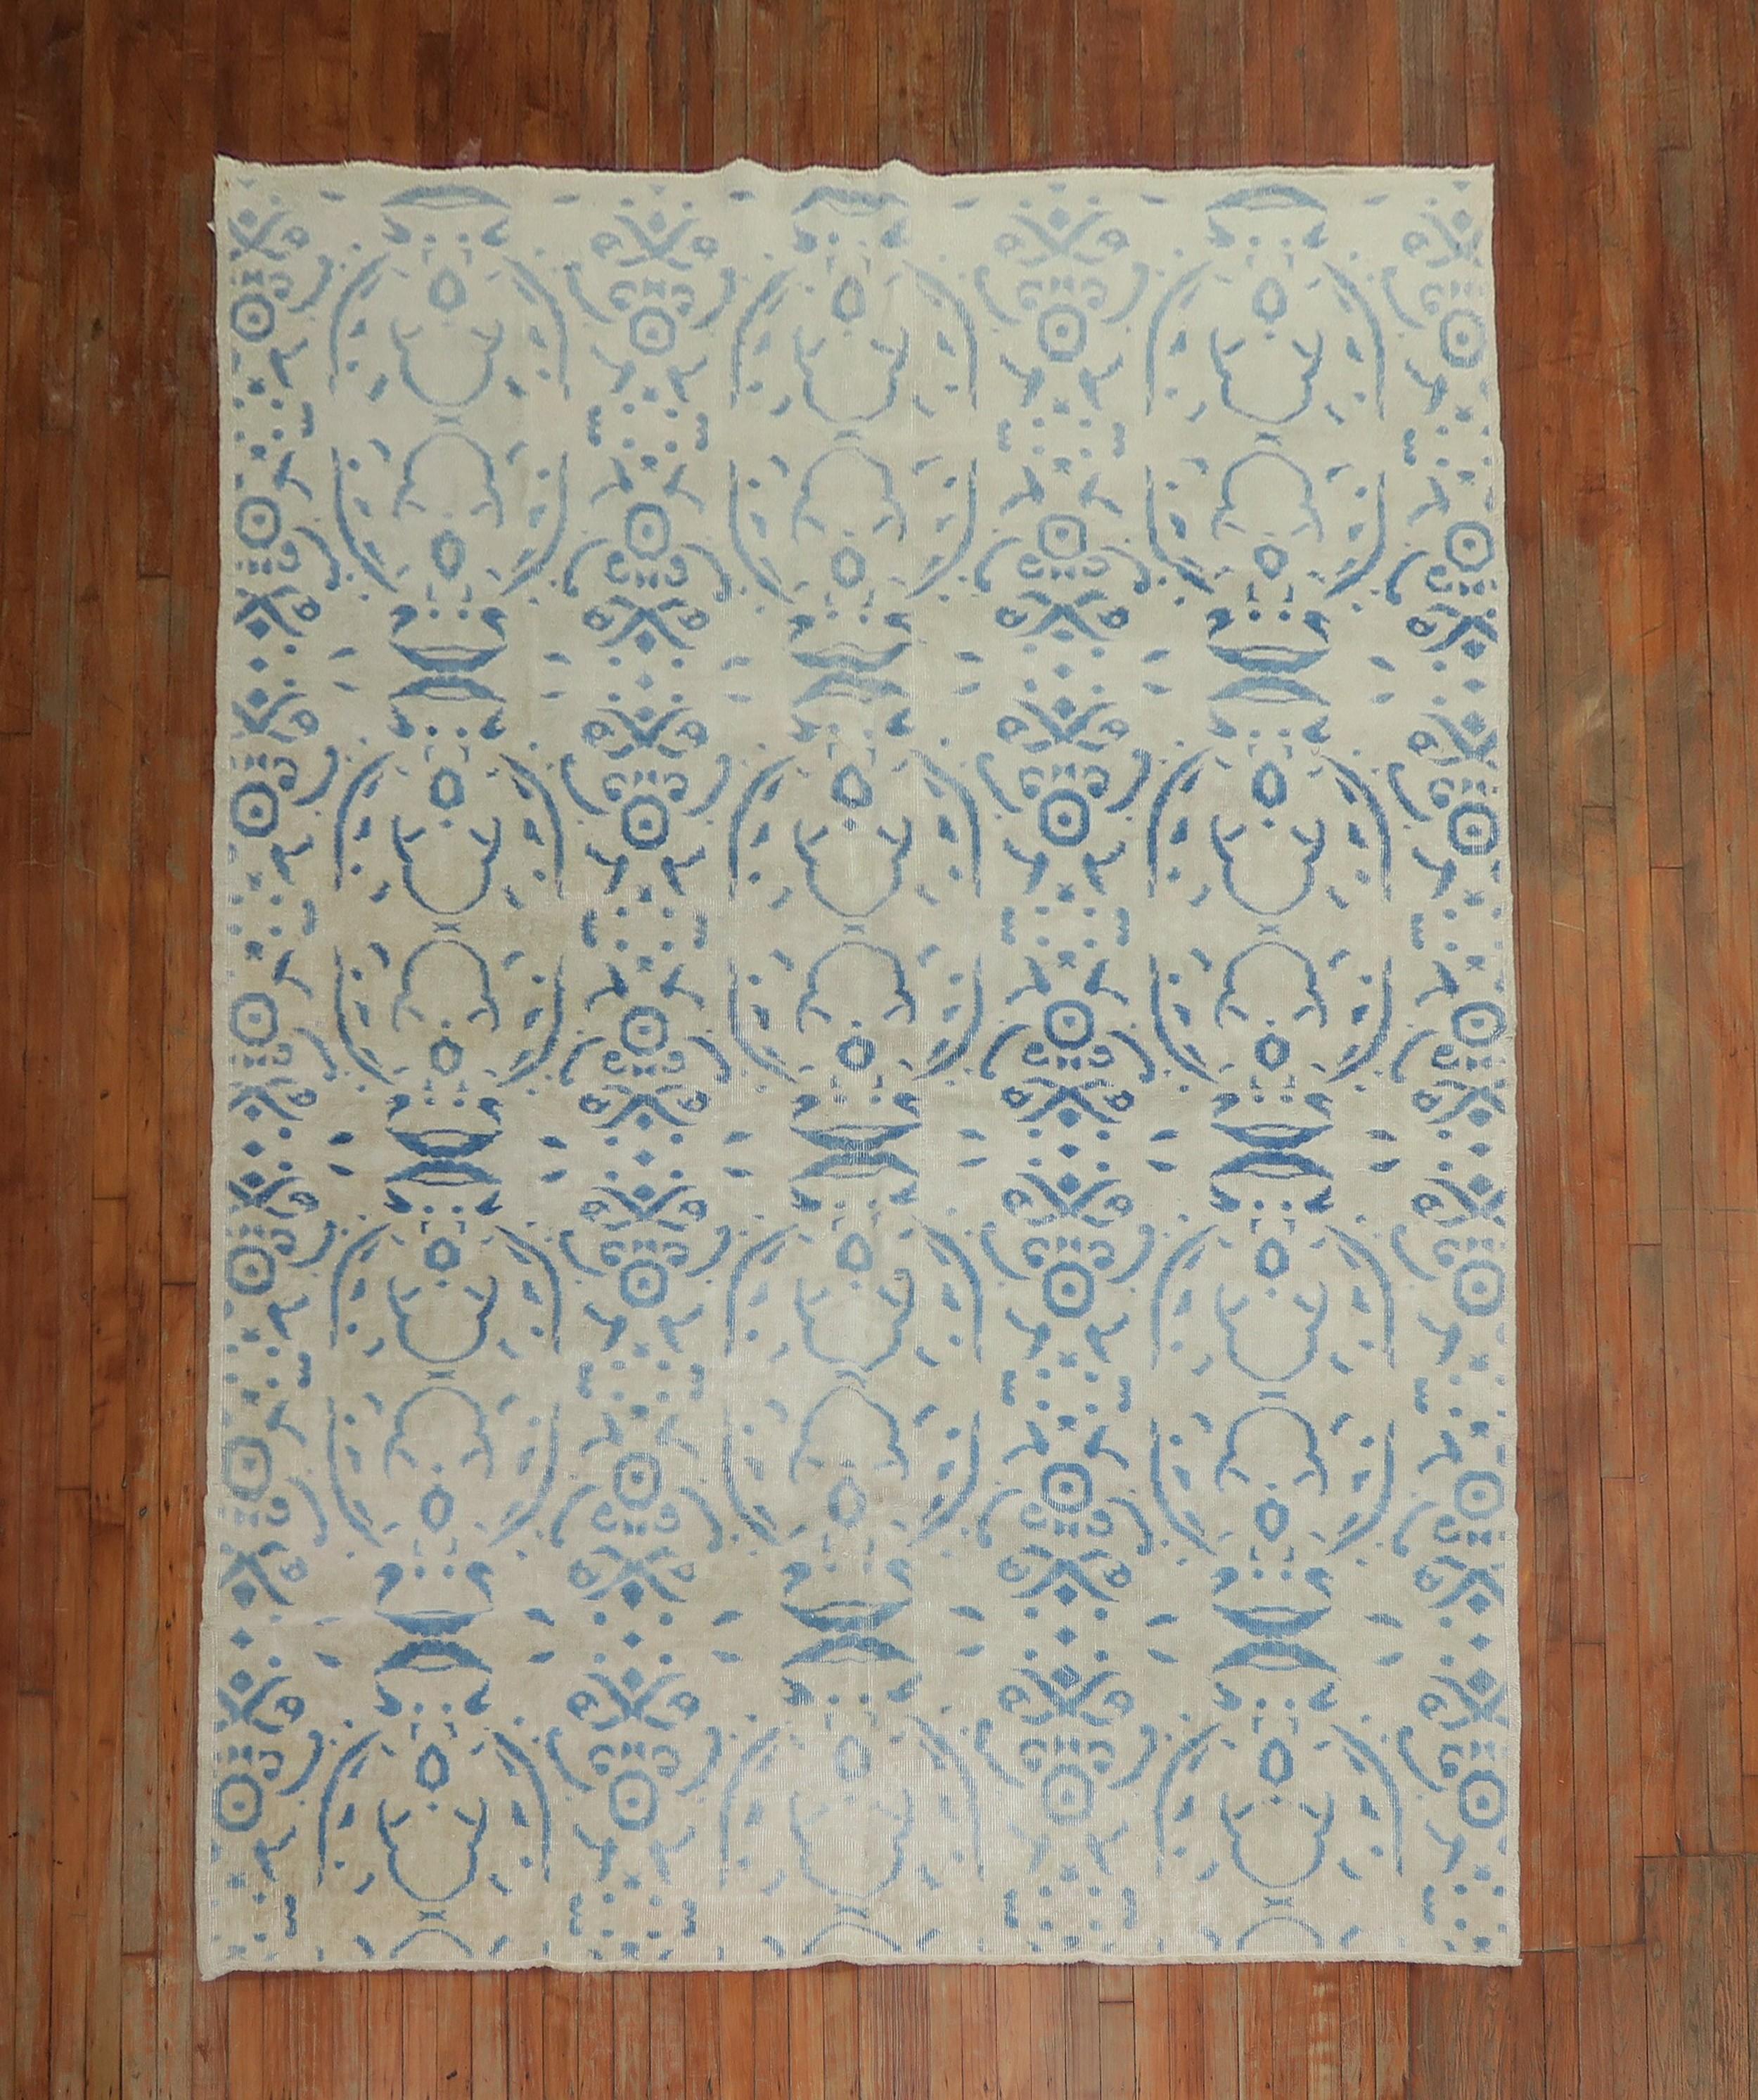 Mid 20th century borderless Turkish Deco worn rug

Measures: 7'4” x 10'2”.